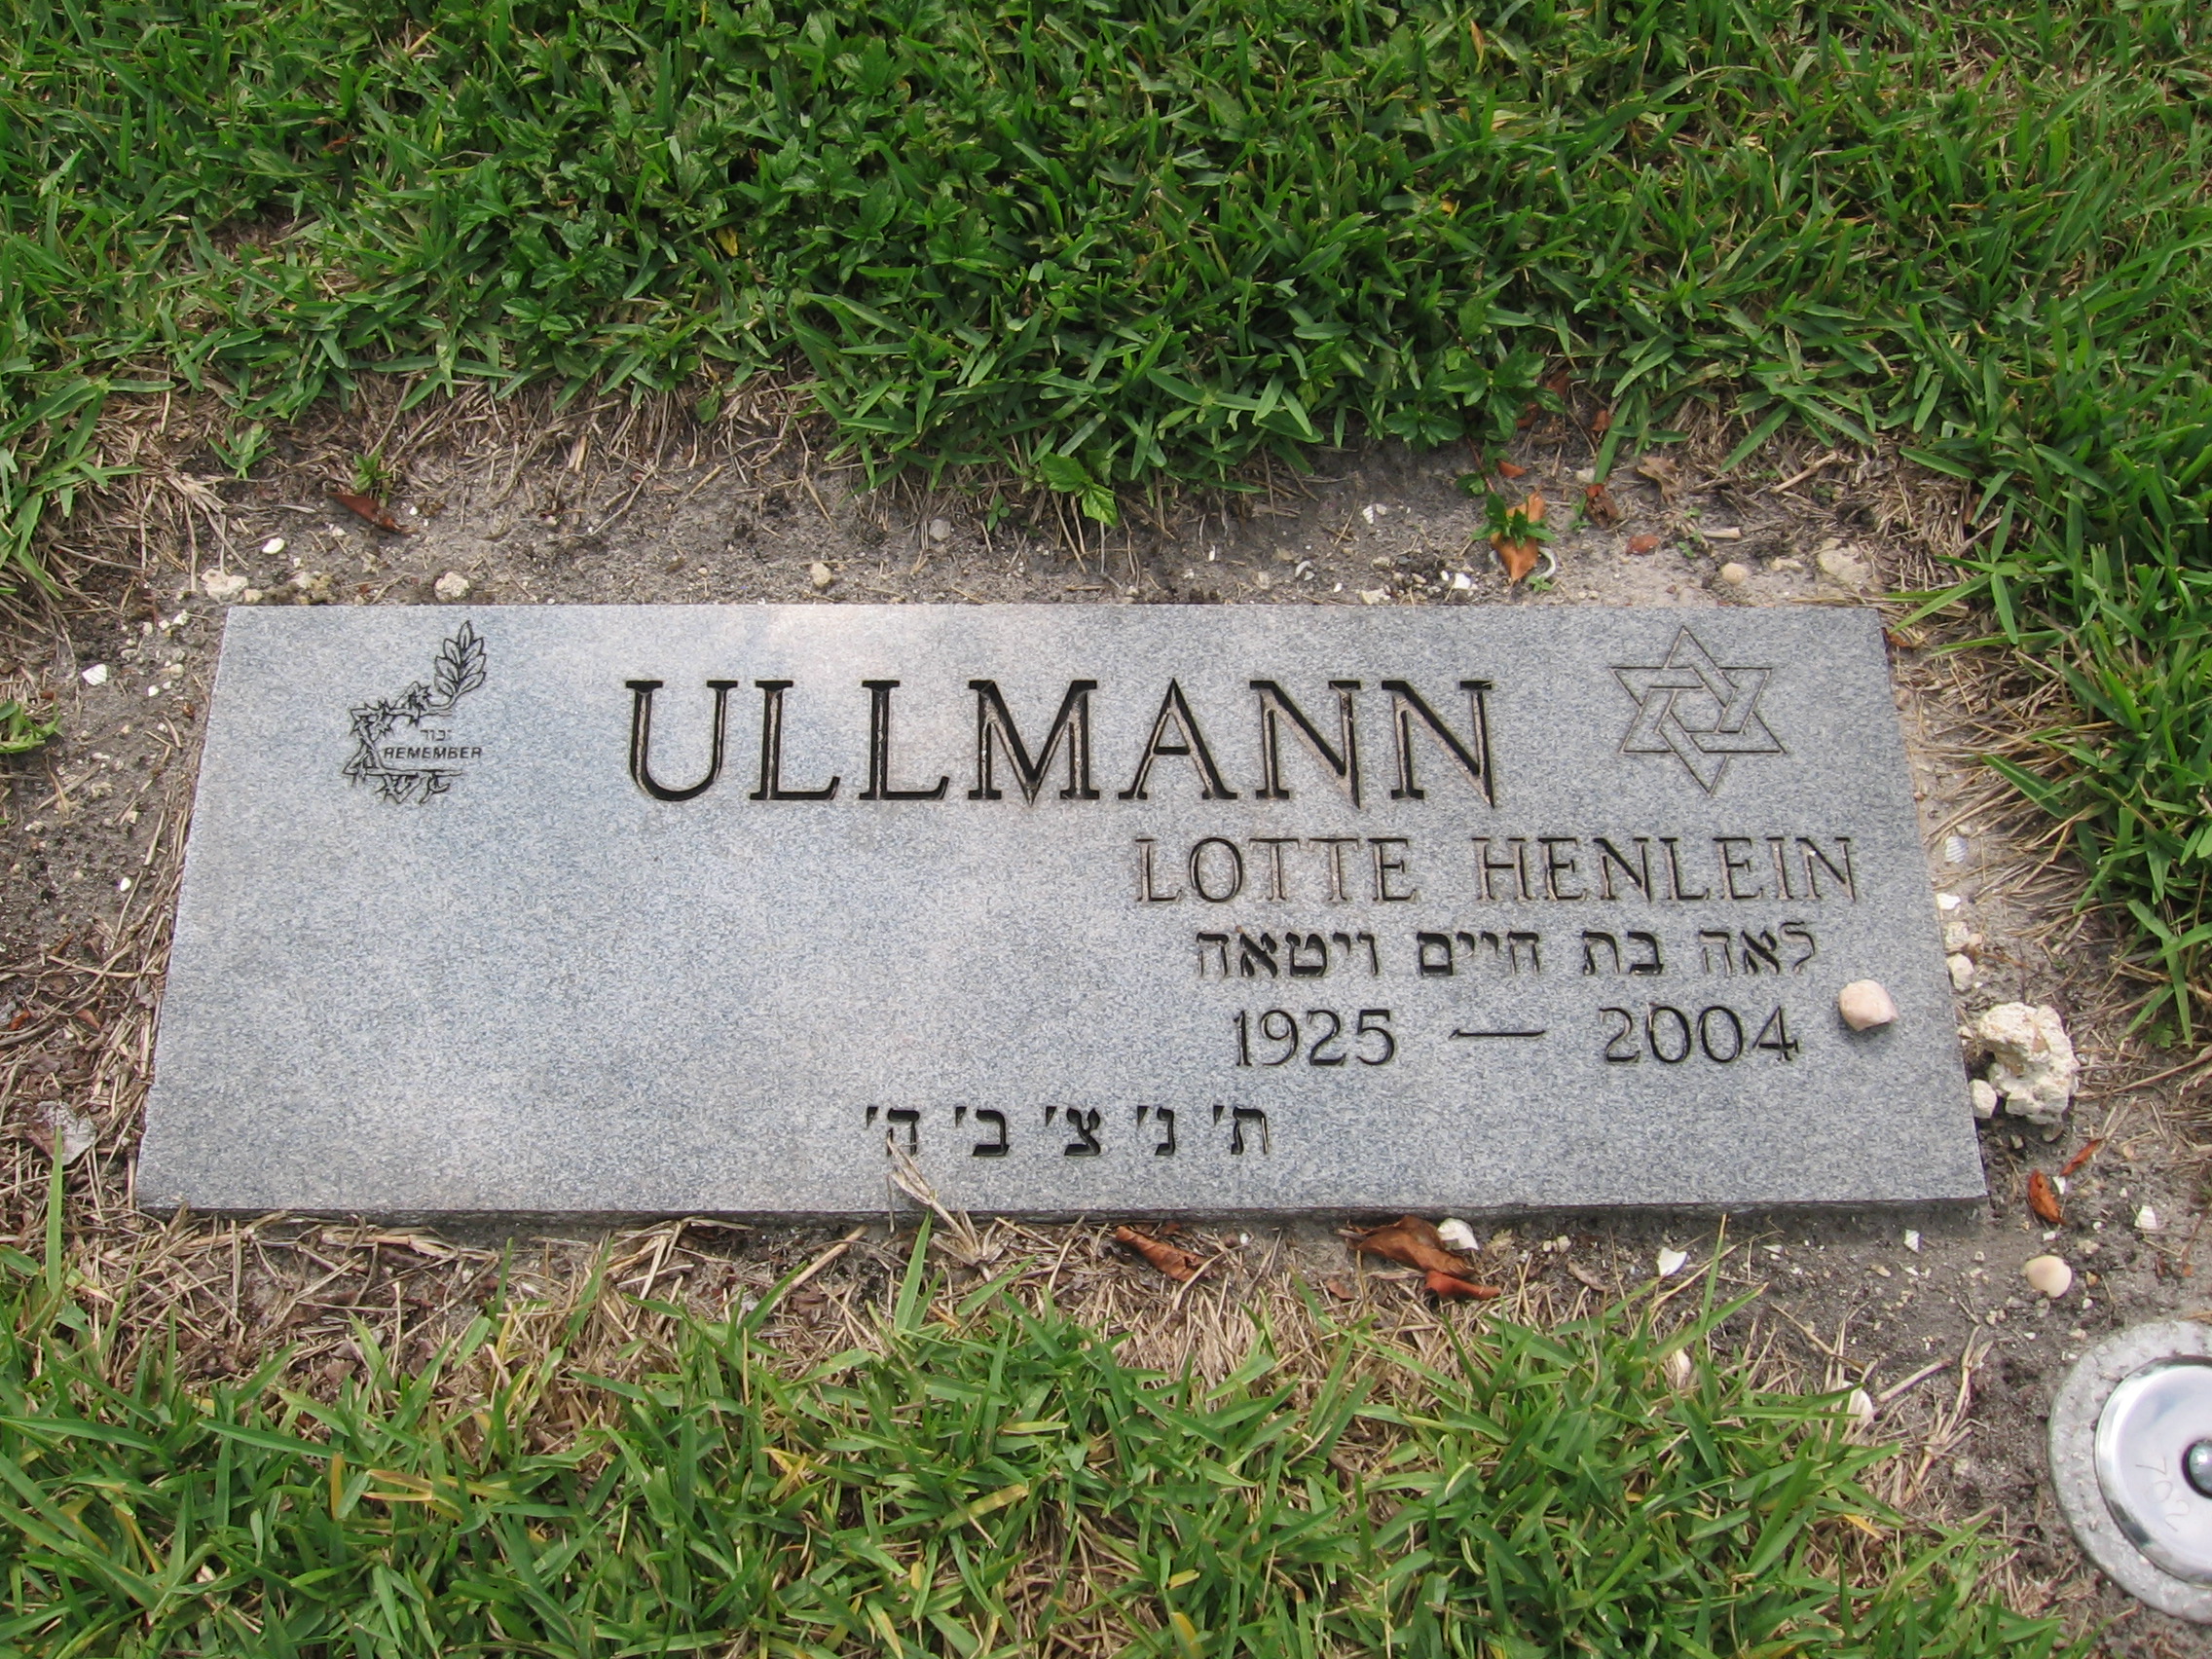 Lottie Henlein Ullmann